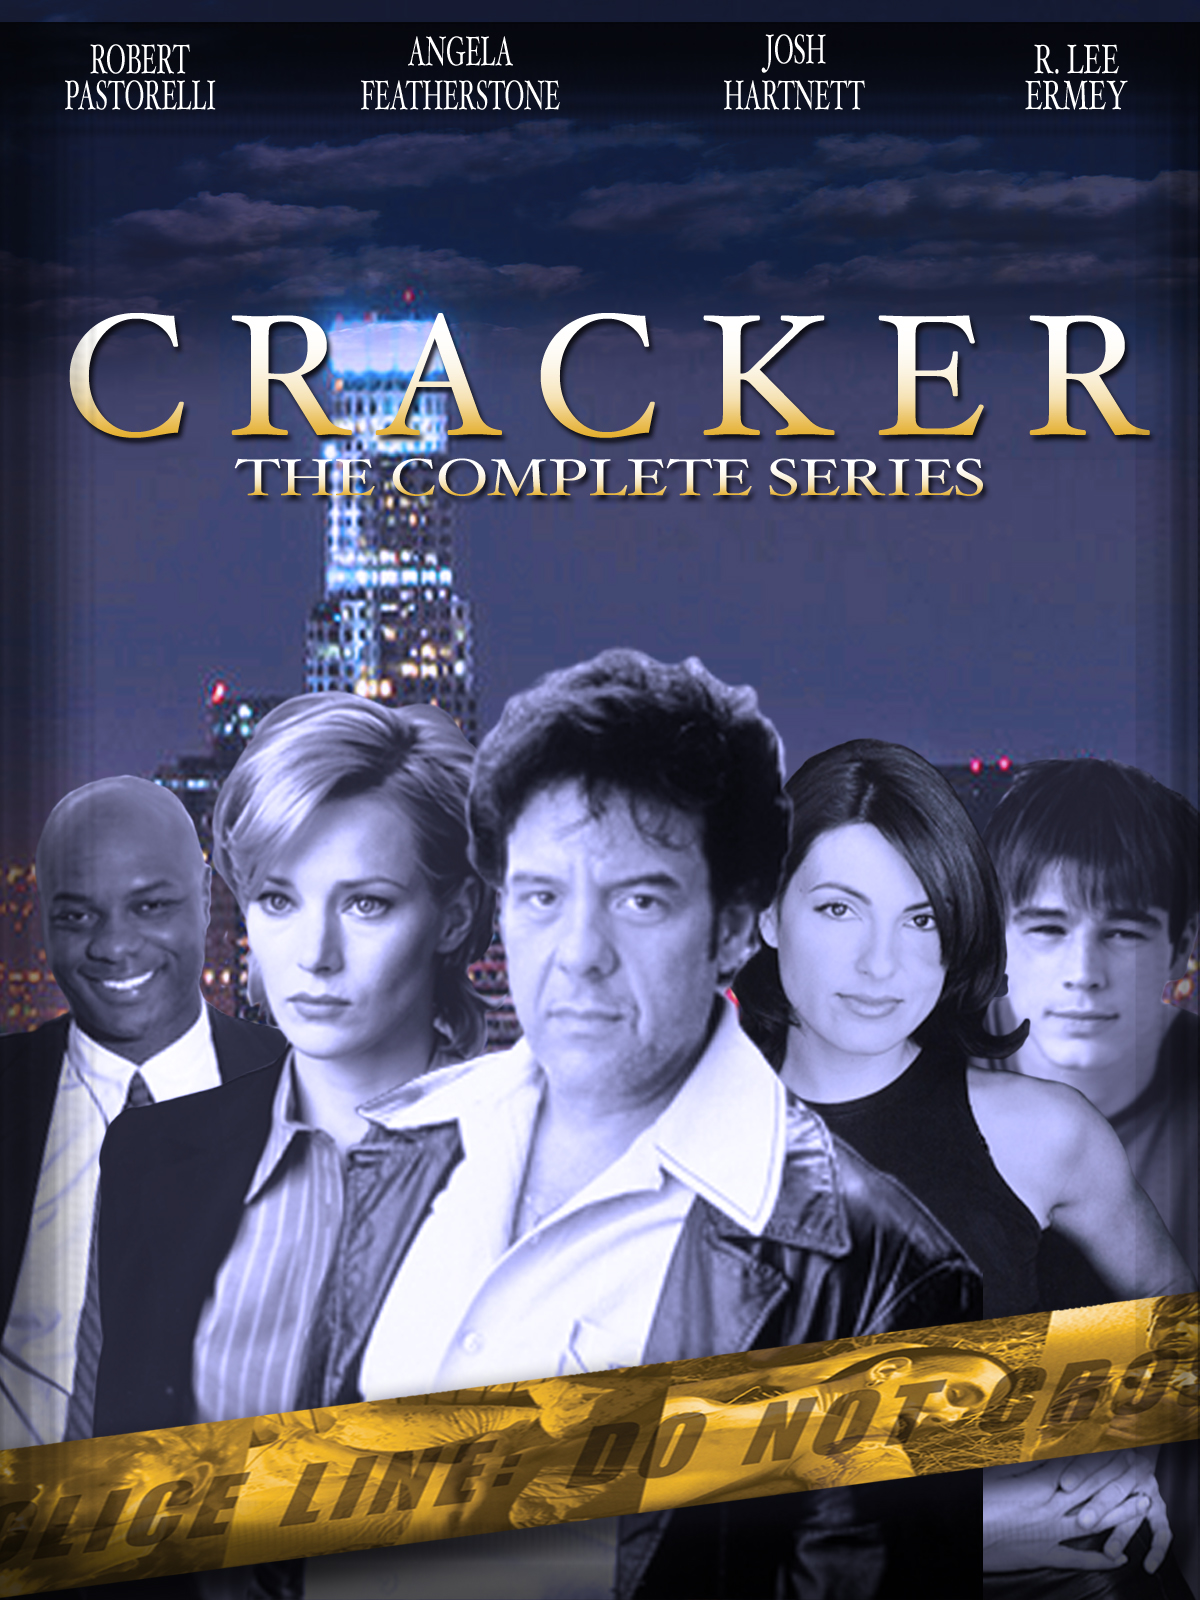 Cracker Review